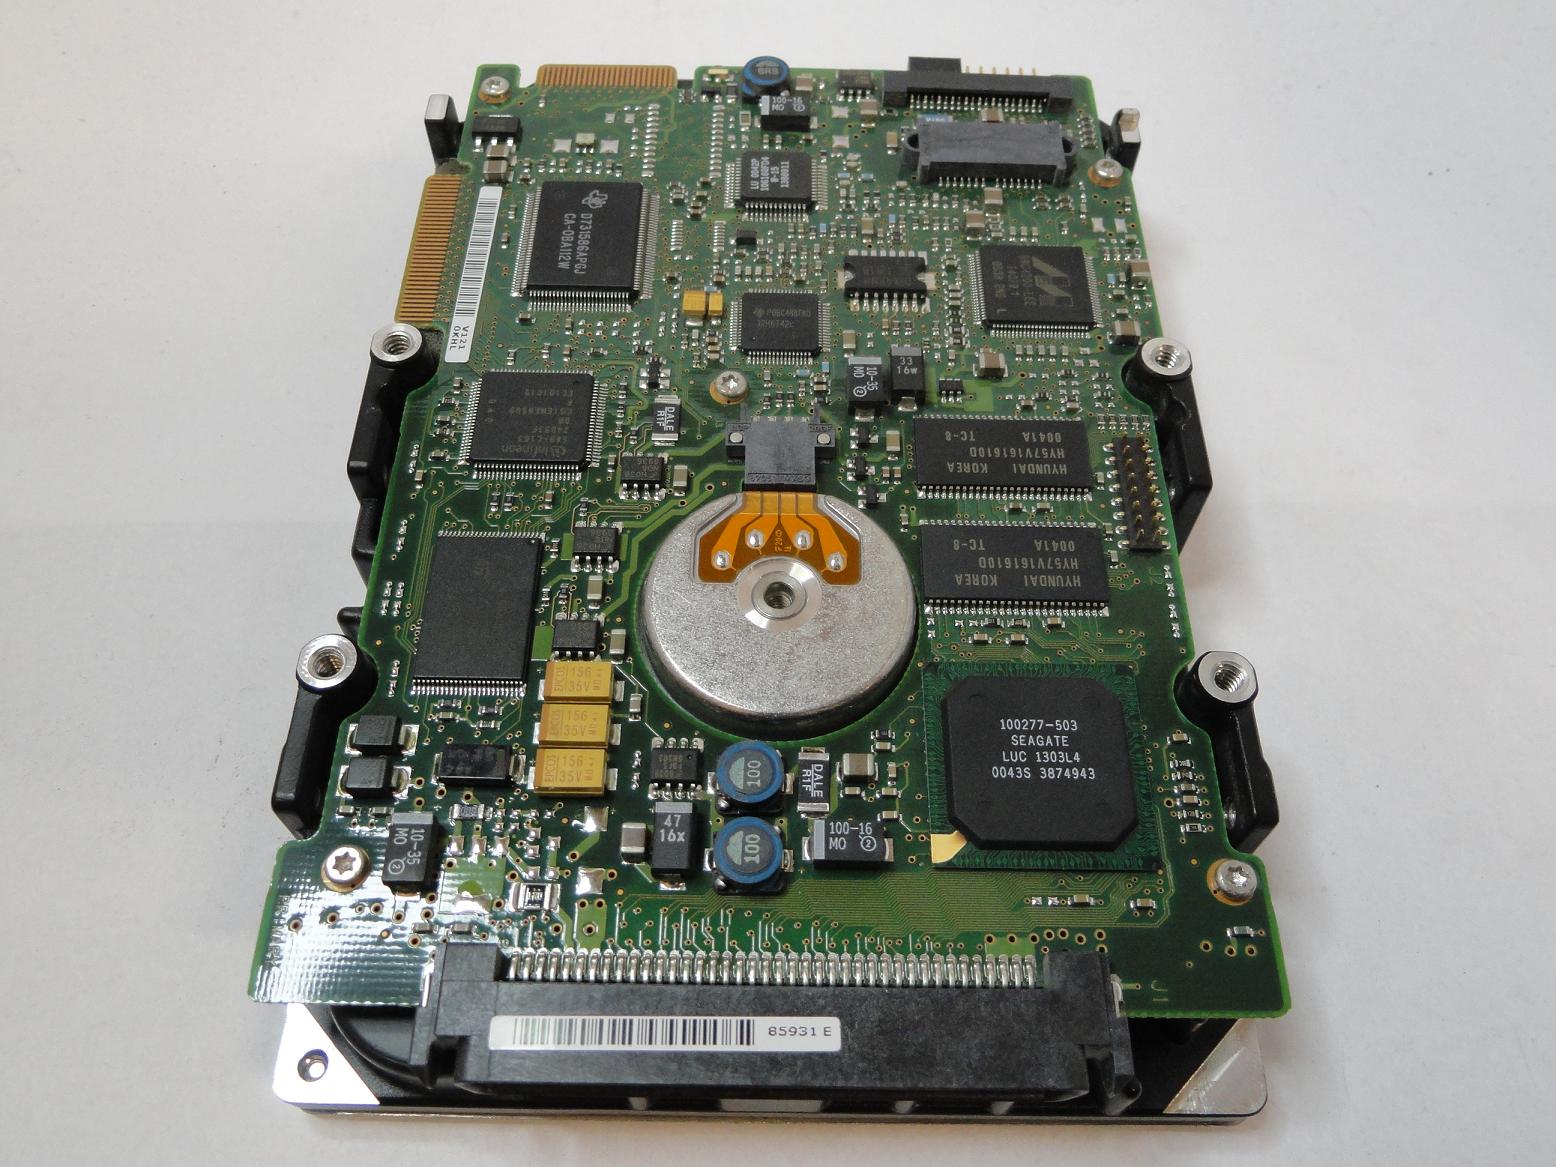 PR24242_9P4001-083_Seagate Siemens 9GB SCSI 80 Pin 10Krpm 3.5in HDD - Image2